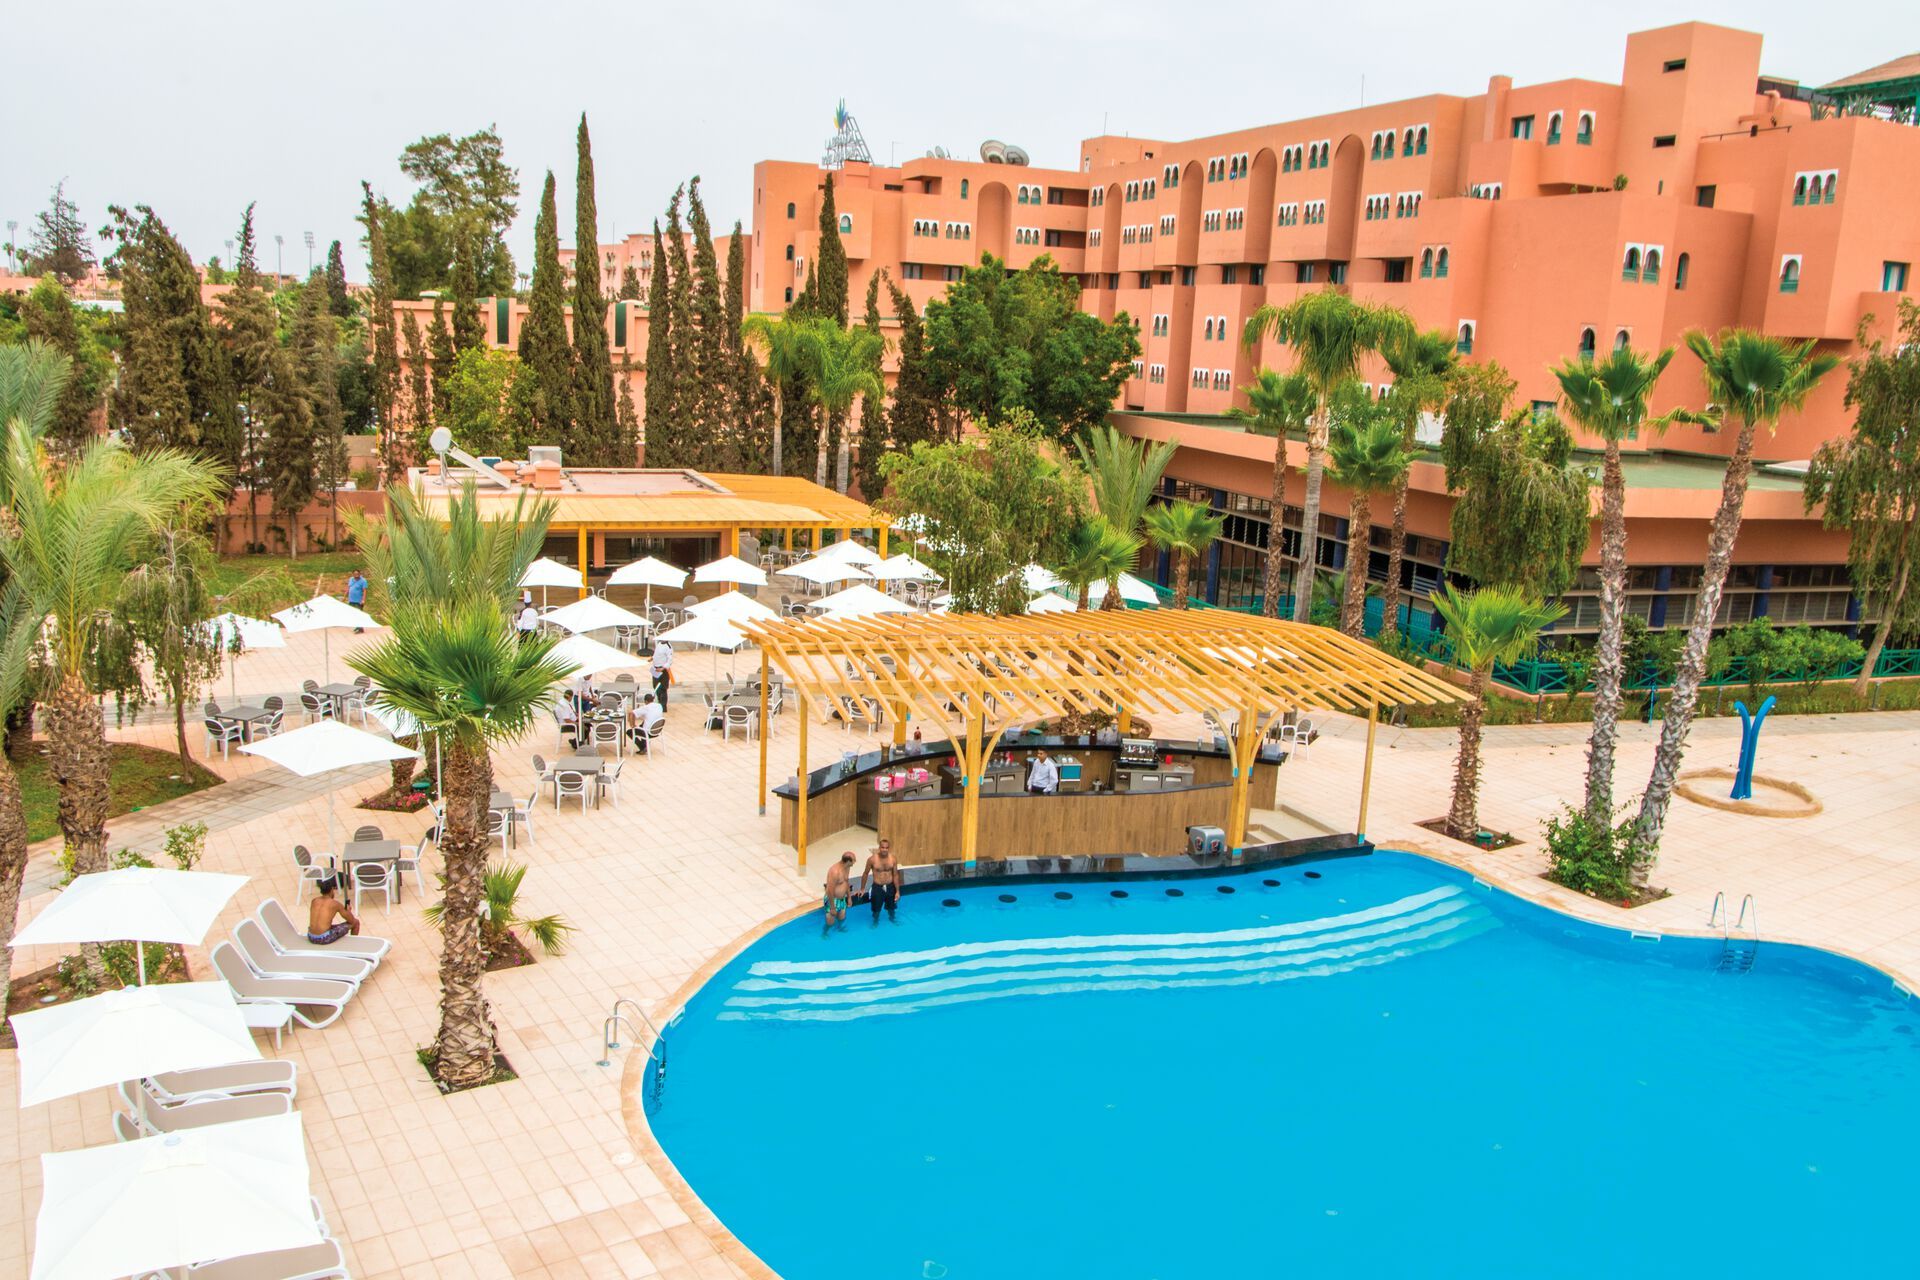 Maroc - Marrakech - Hotel Club Rose FTI 4*